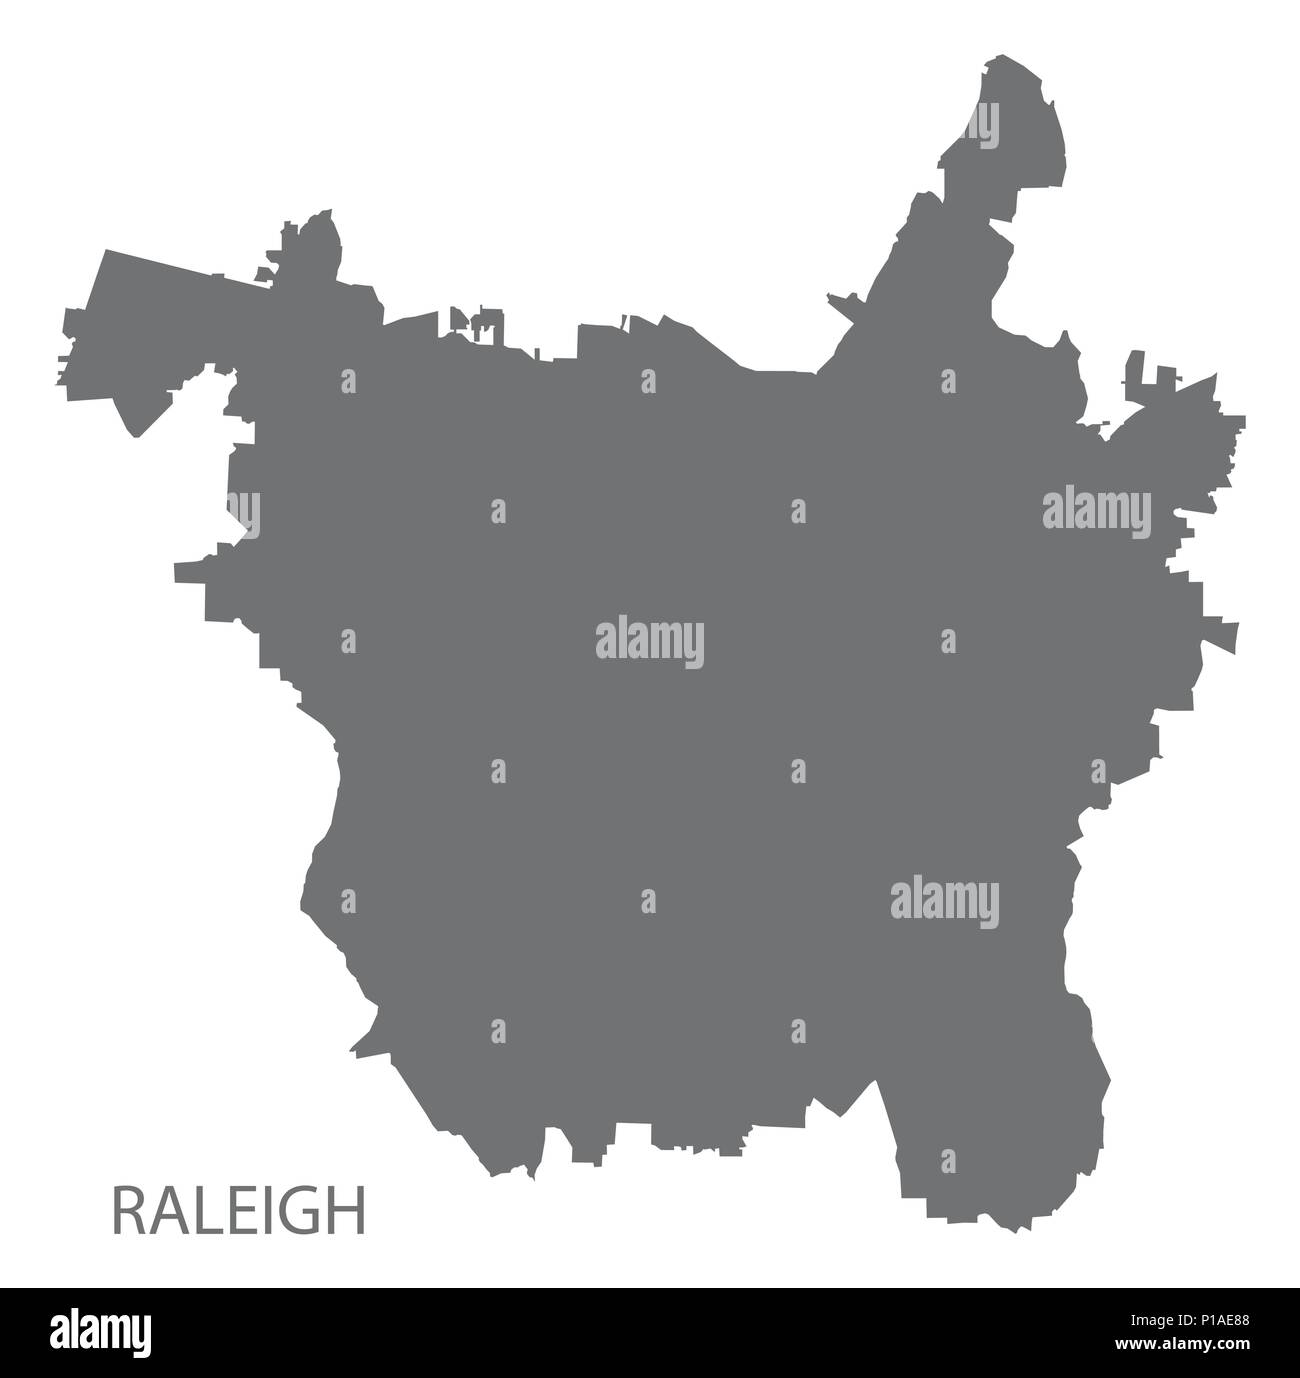 Raleigh North Carolina city map grey illustration silhouette shape Stock Vector